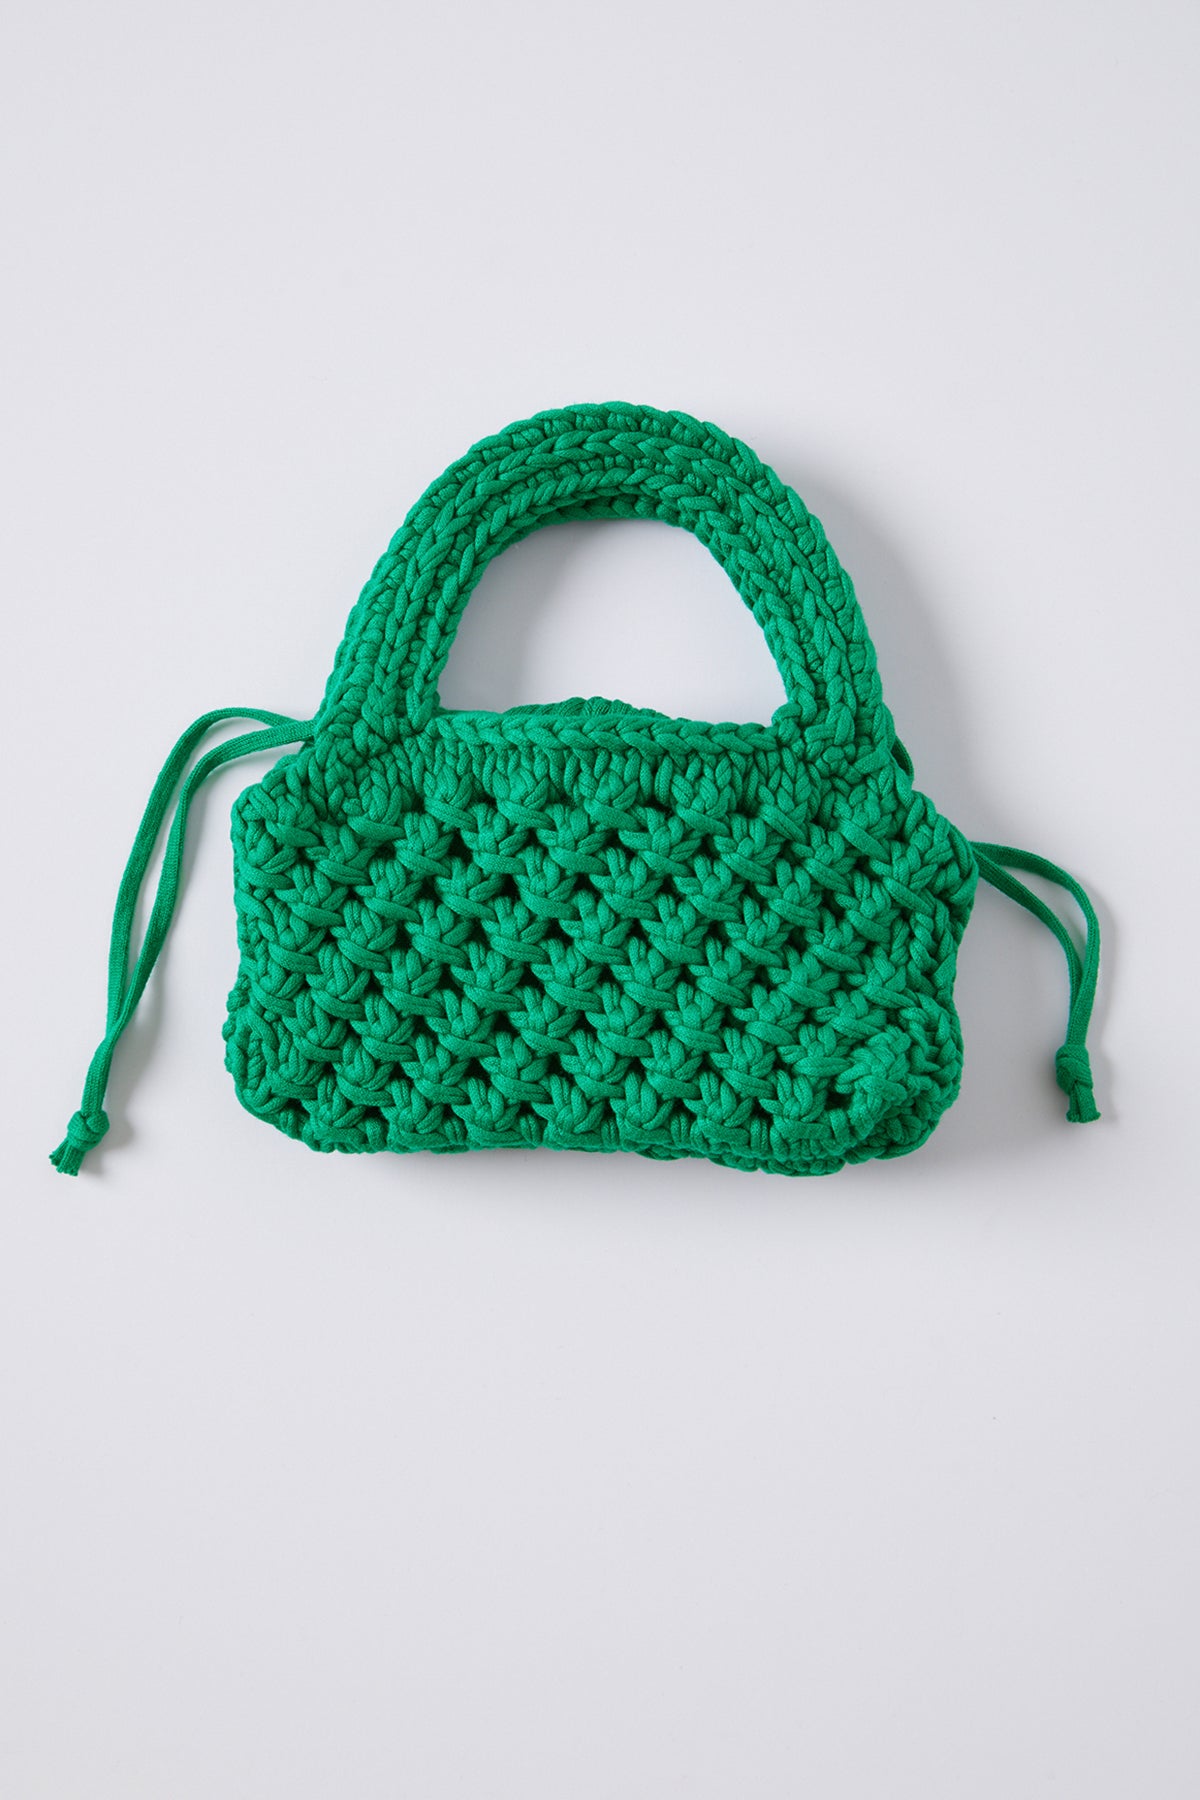 Bennie Crochet Bag in clover-25994890870977